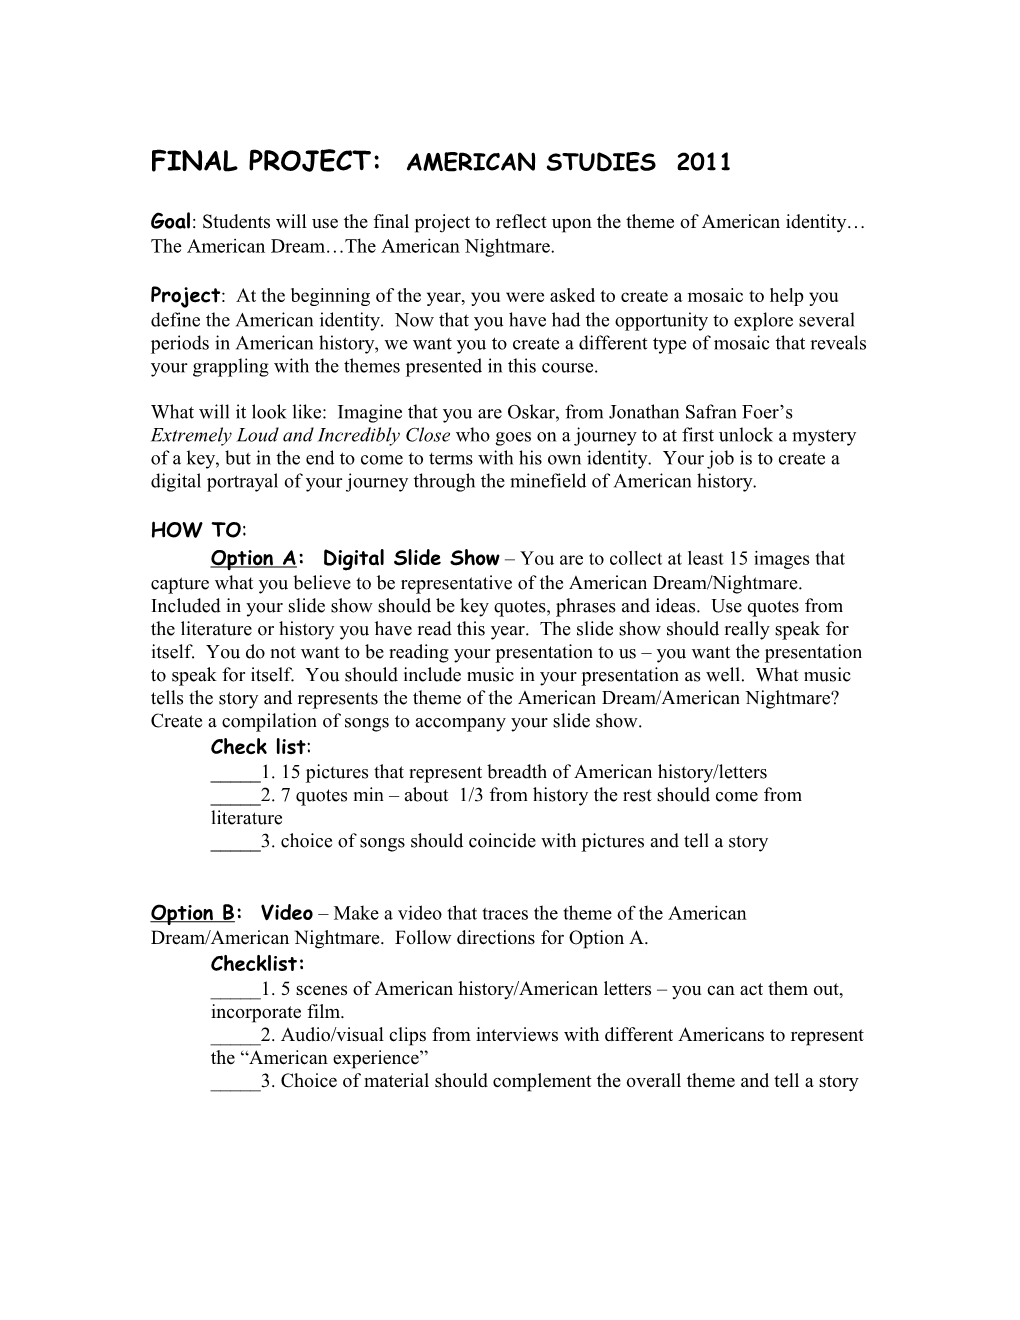 Final Project: American Studies 2009